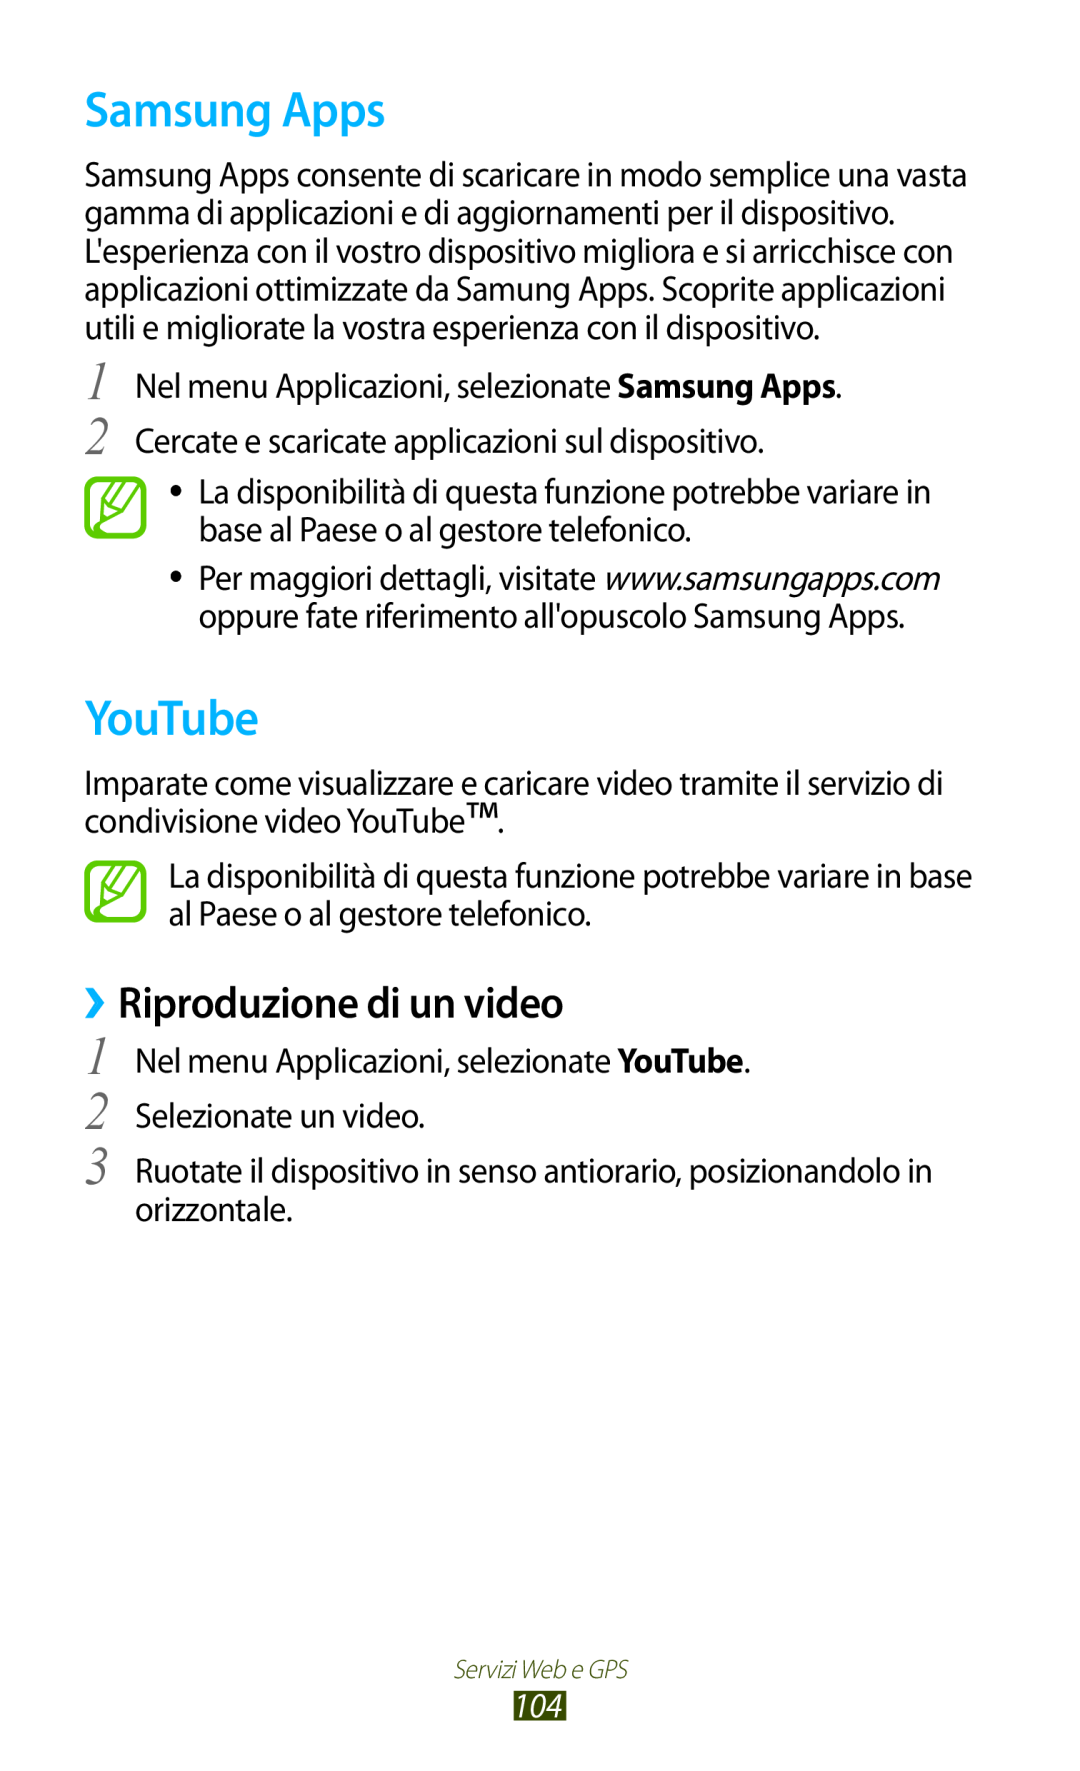 Samsung GT-S7560UWAWIN, GT-S7560ZKAXEO, GT-S7560ZKAWIN, GT-S7560UWATIM Samsung Apps, YouTube, ››Riproduzione di un video 